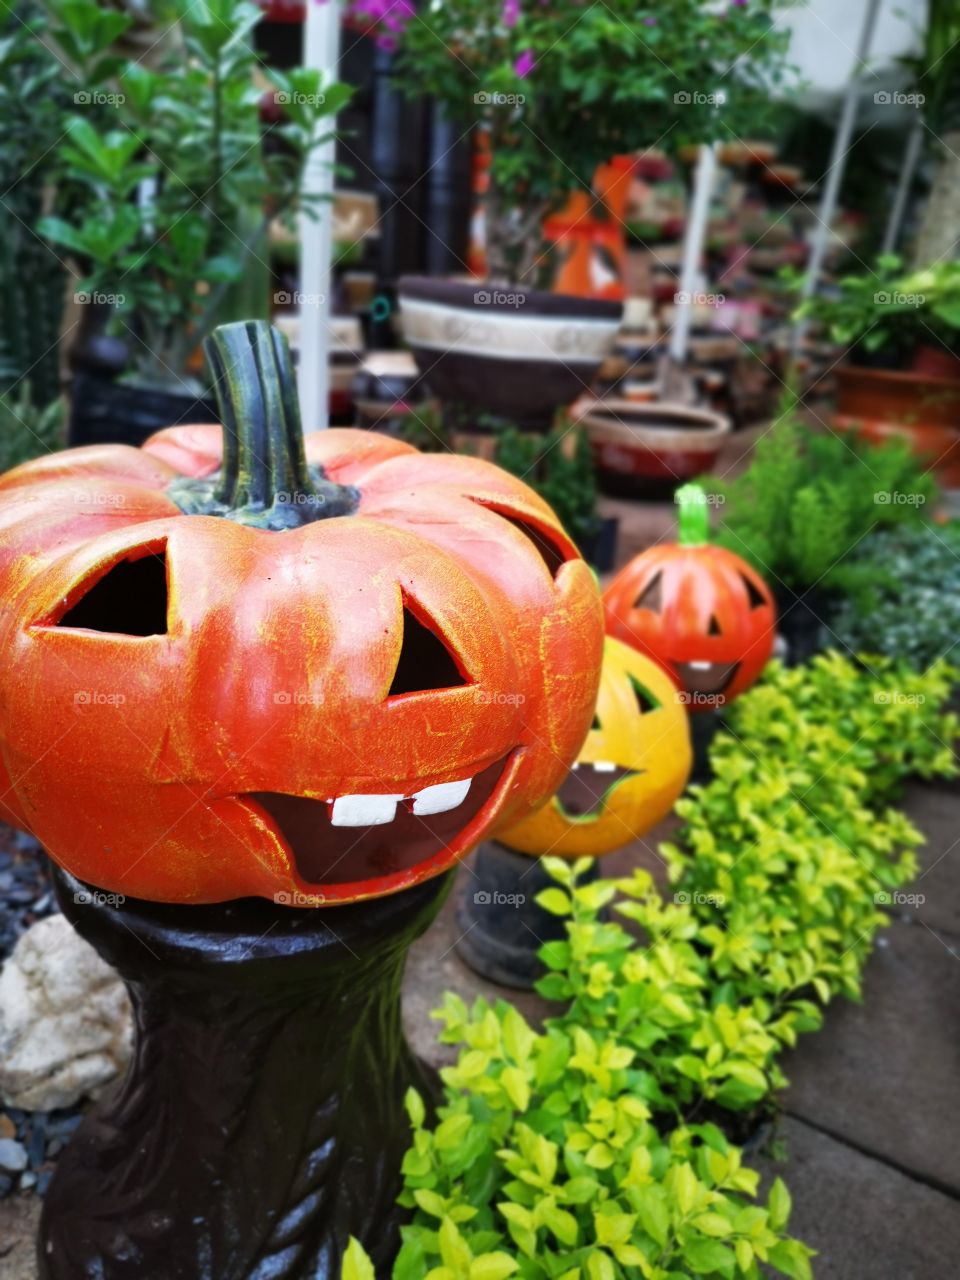 Seasonal pumpkins, Halloween,
Smile's